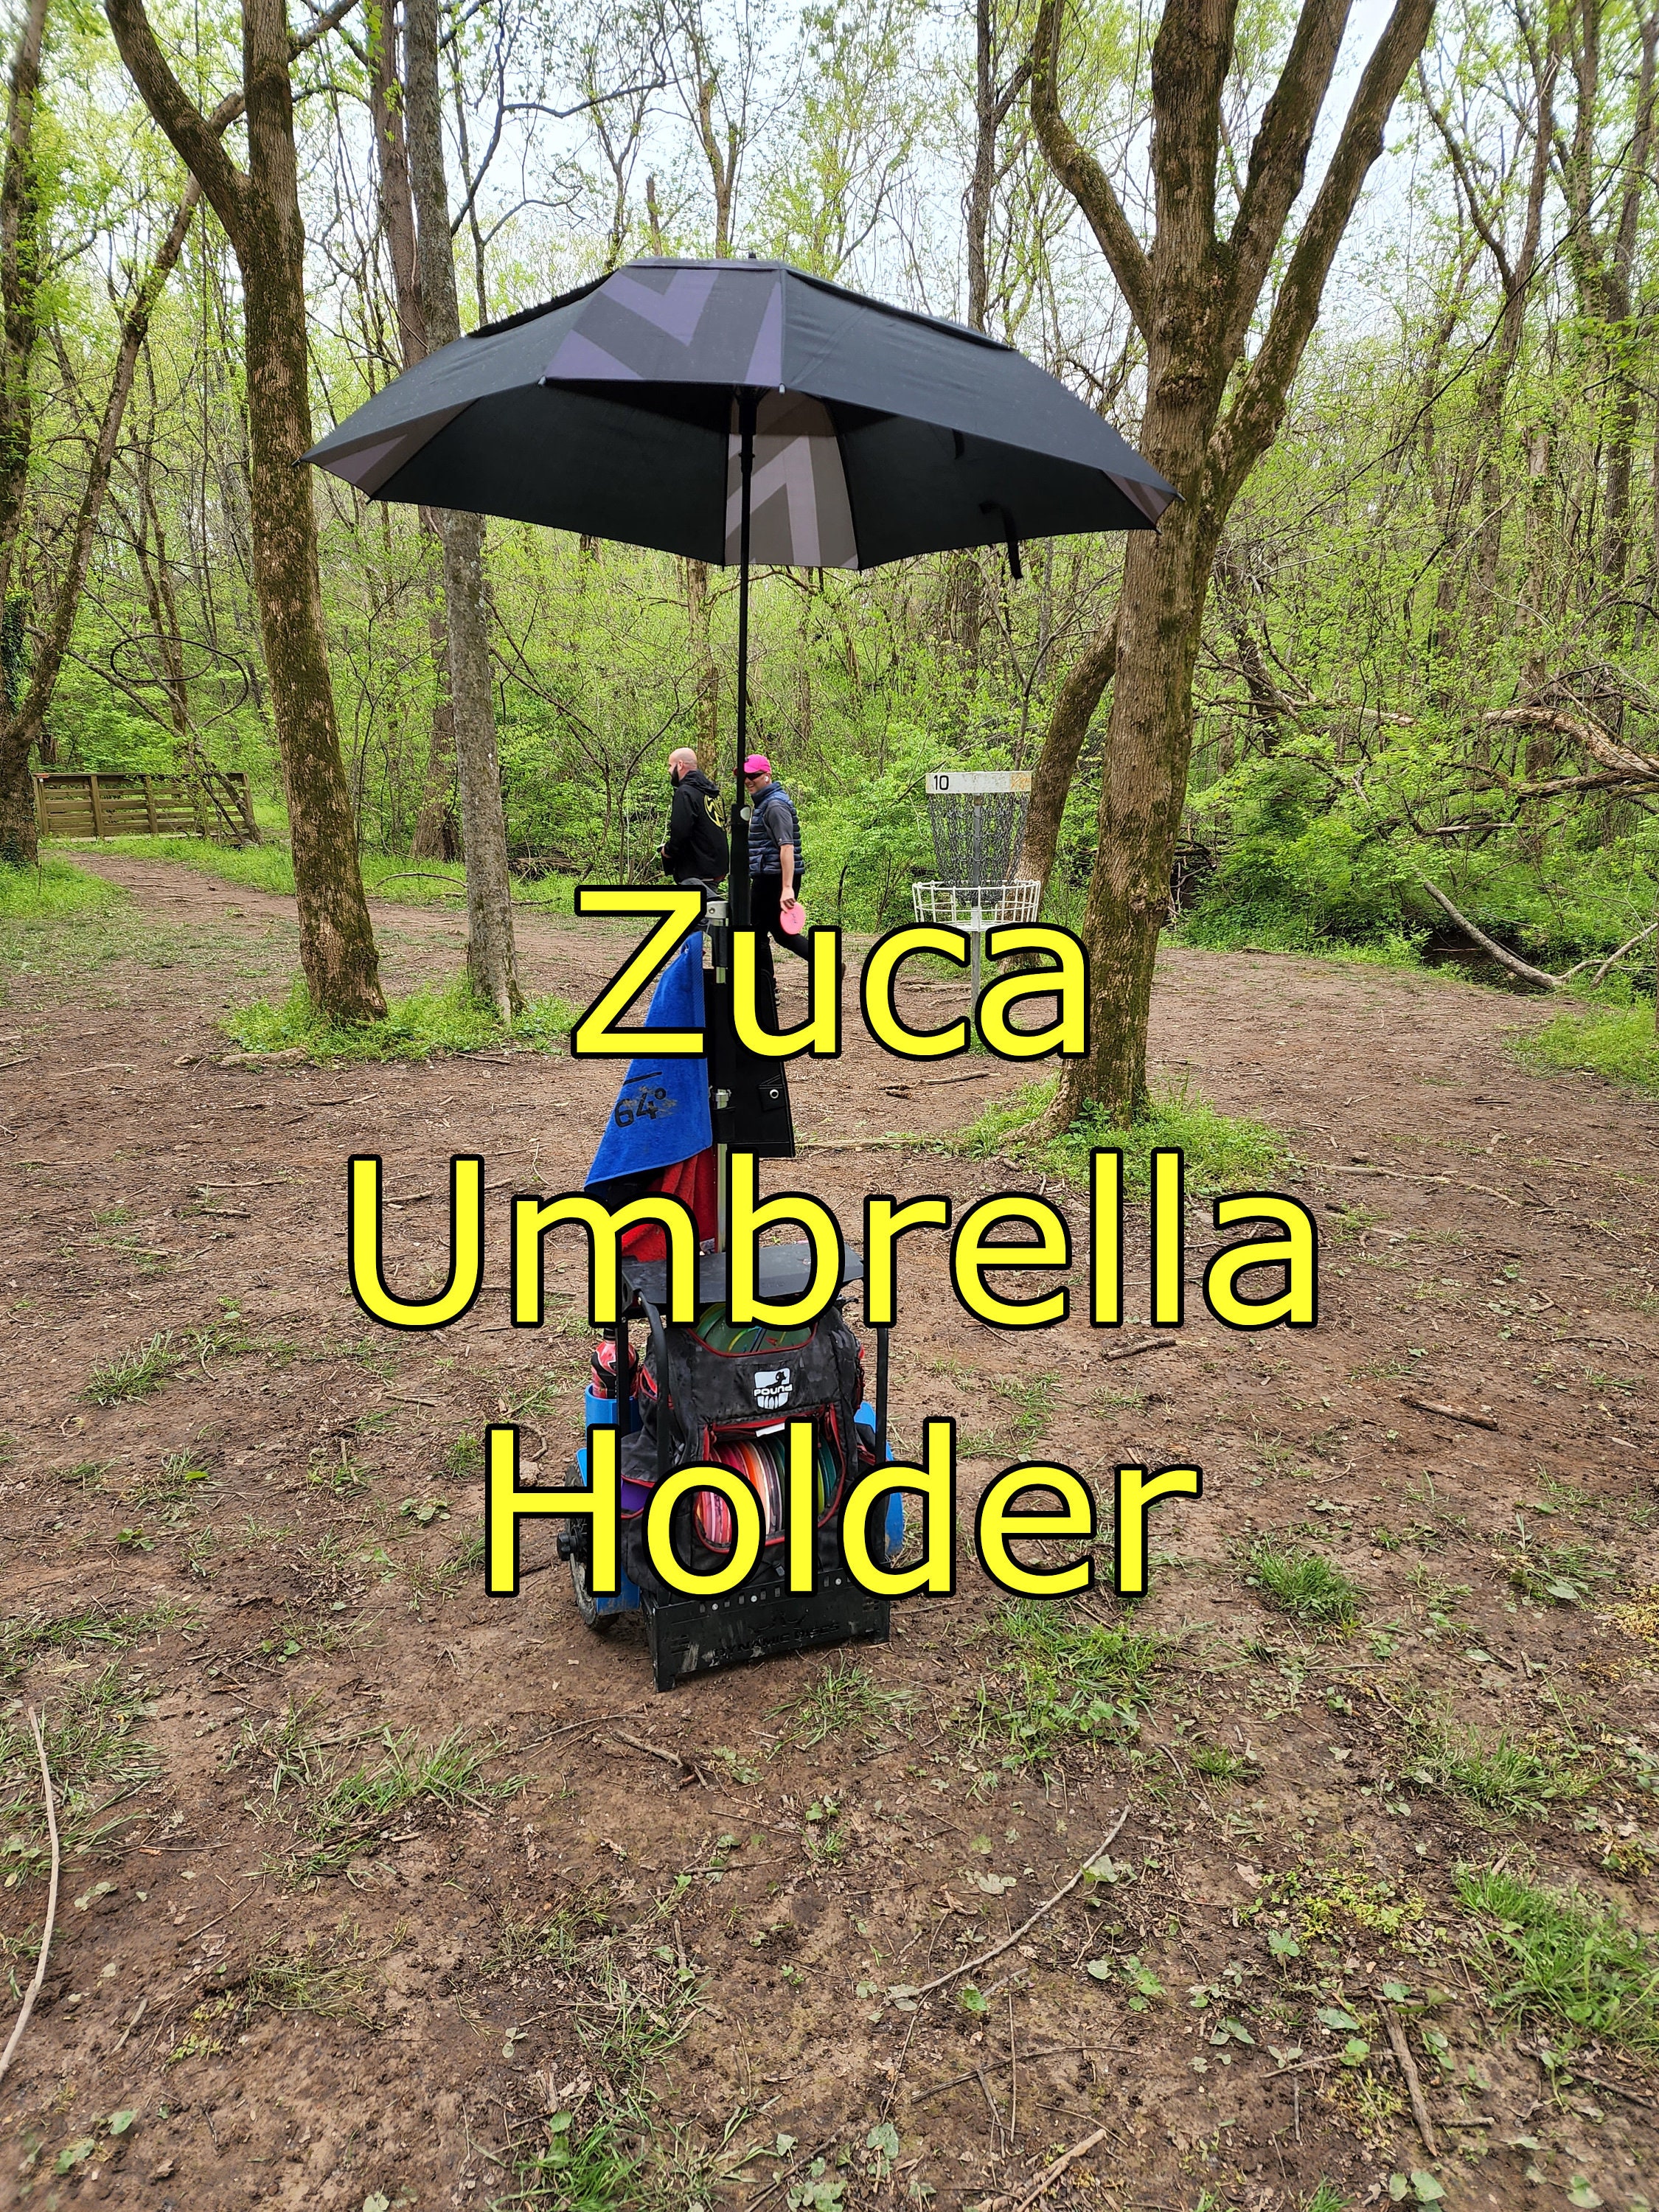 Stand bag umbrella holder : r/golf